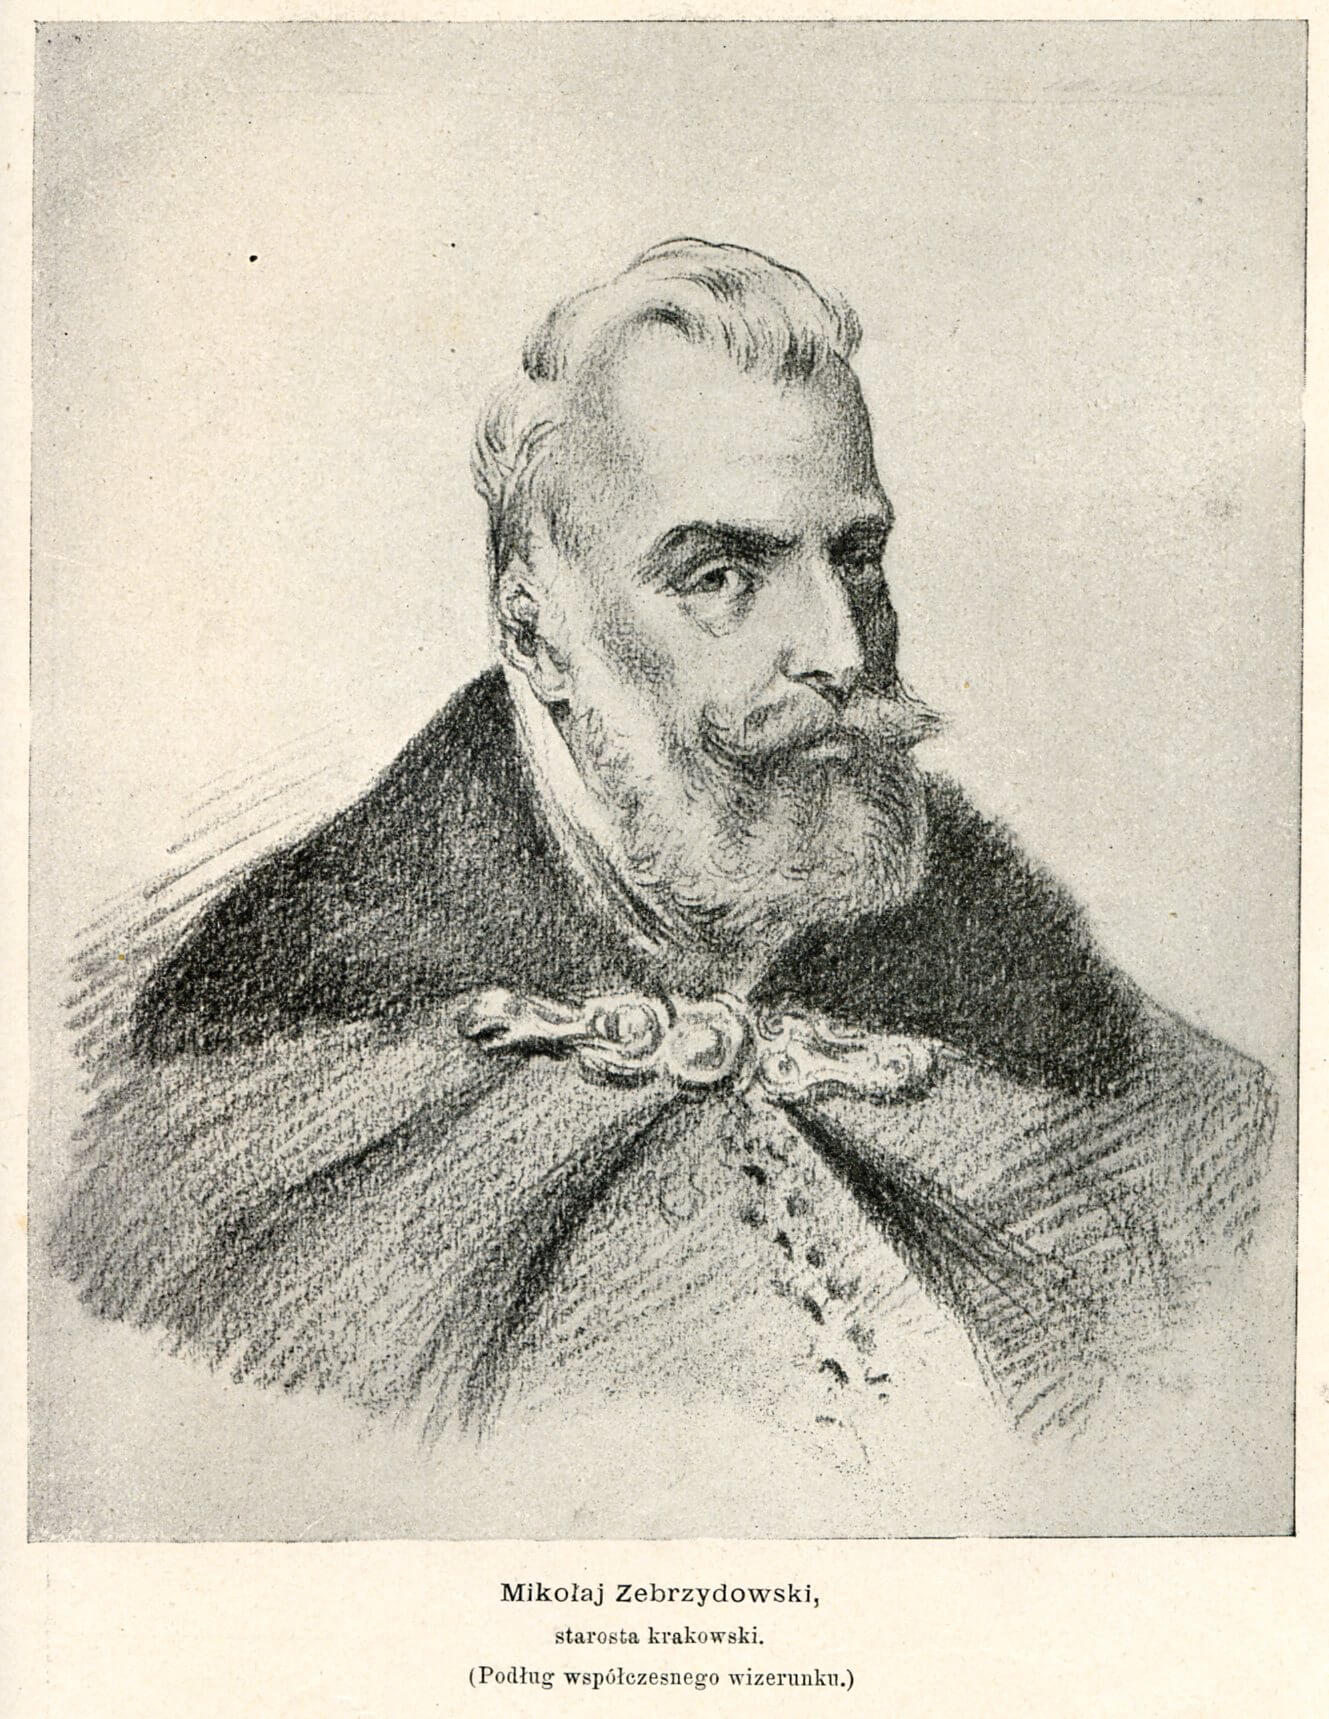 Mikołaj Zebrzydowski, after a contemporary engraving